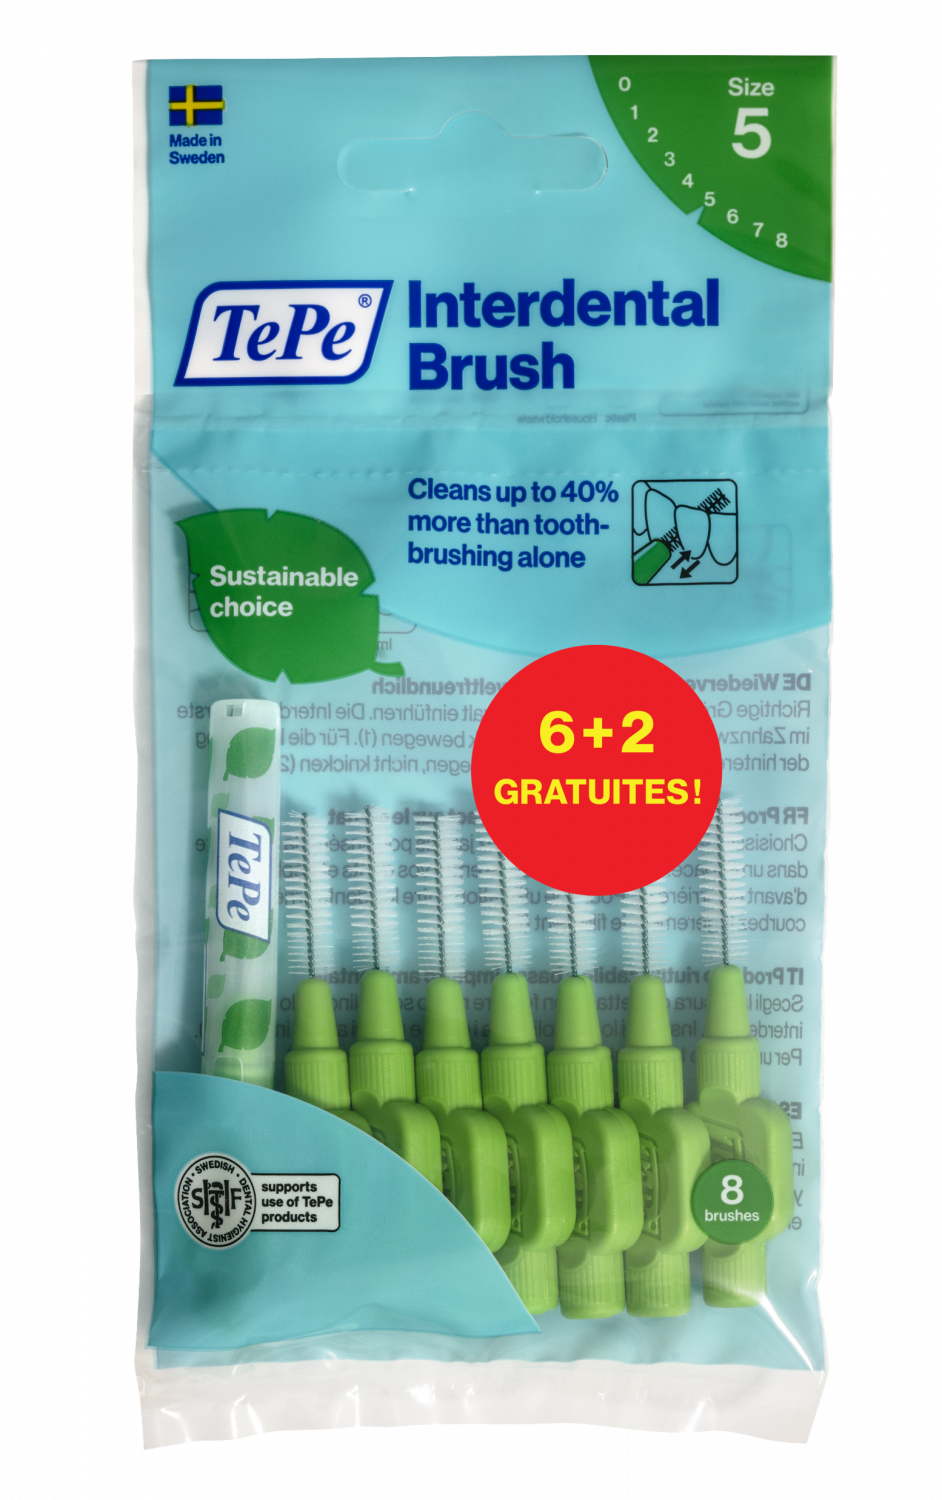 Brossettes interdentaires originales vert taille 5 (0.8mm) TePe - 6 brossettes + 2 gratuites